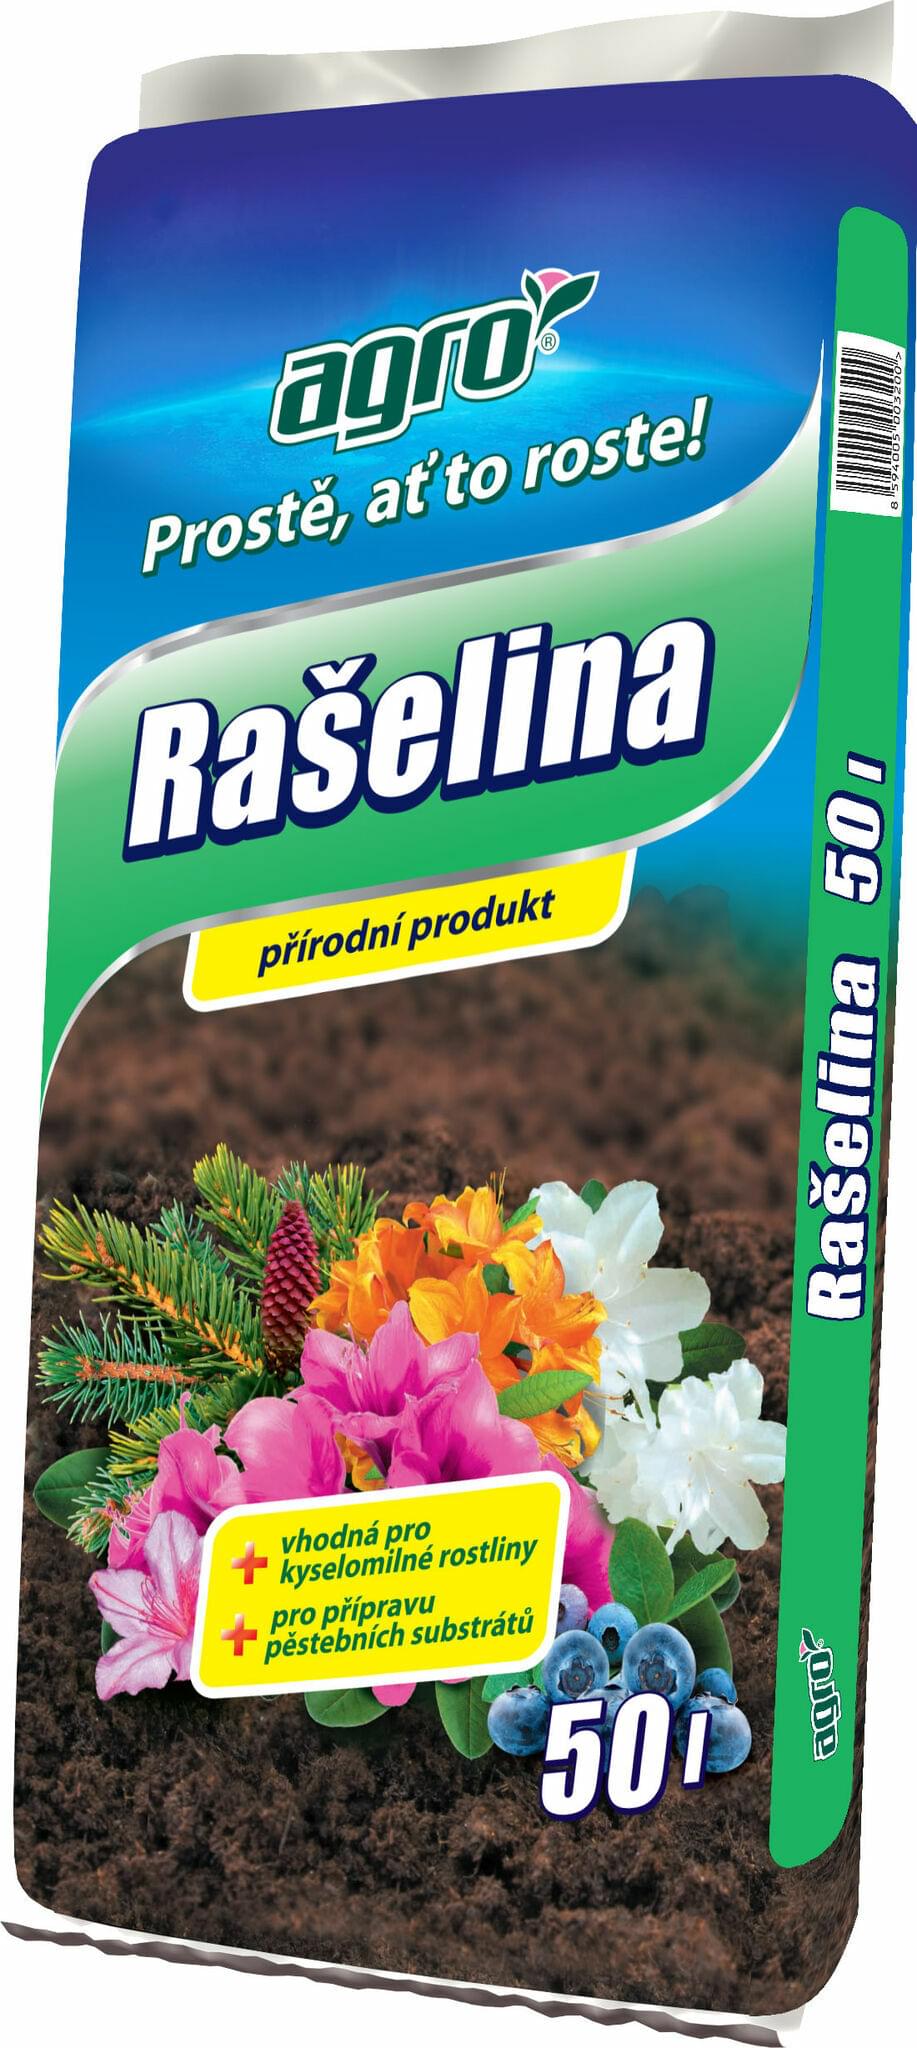 Raelina